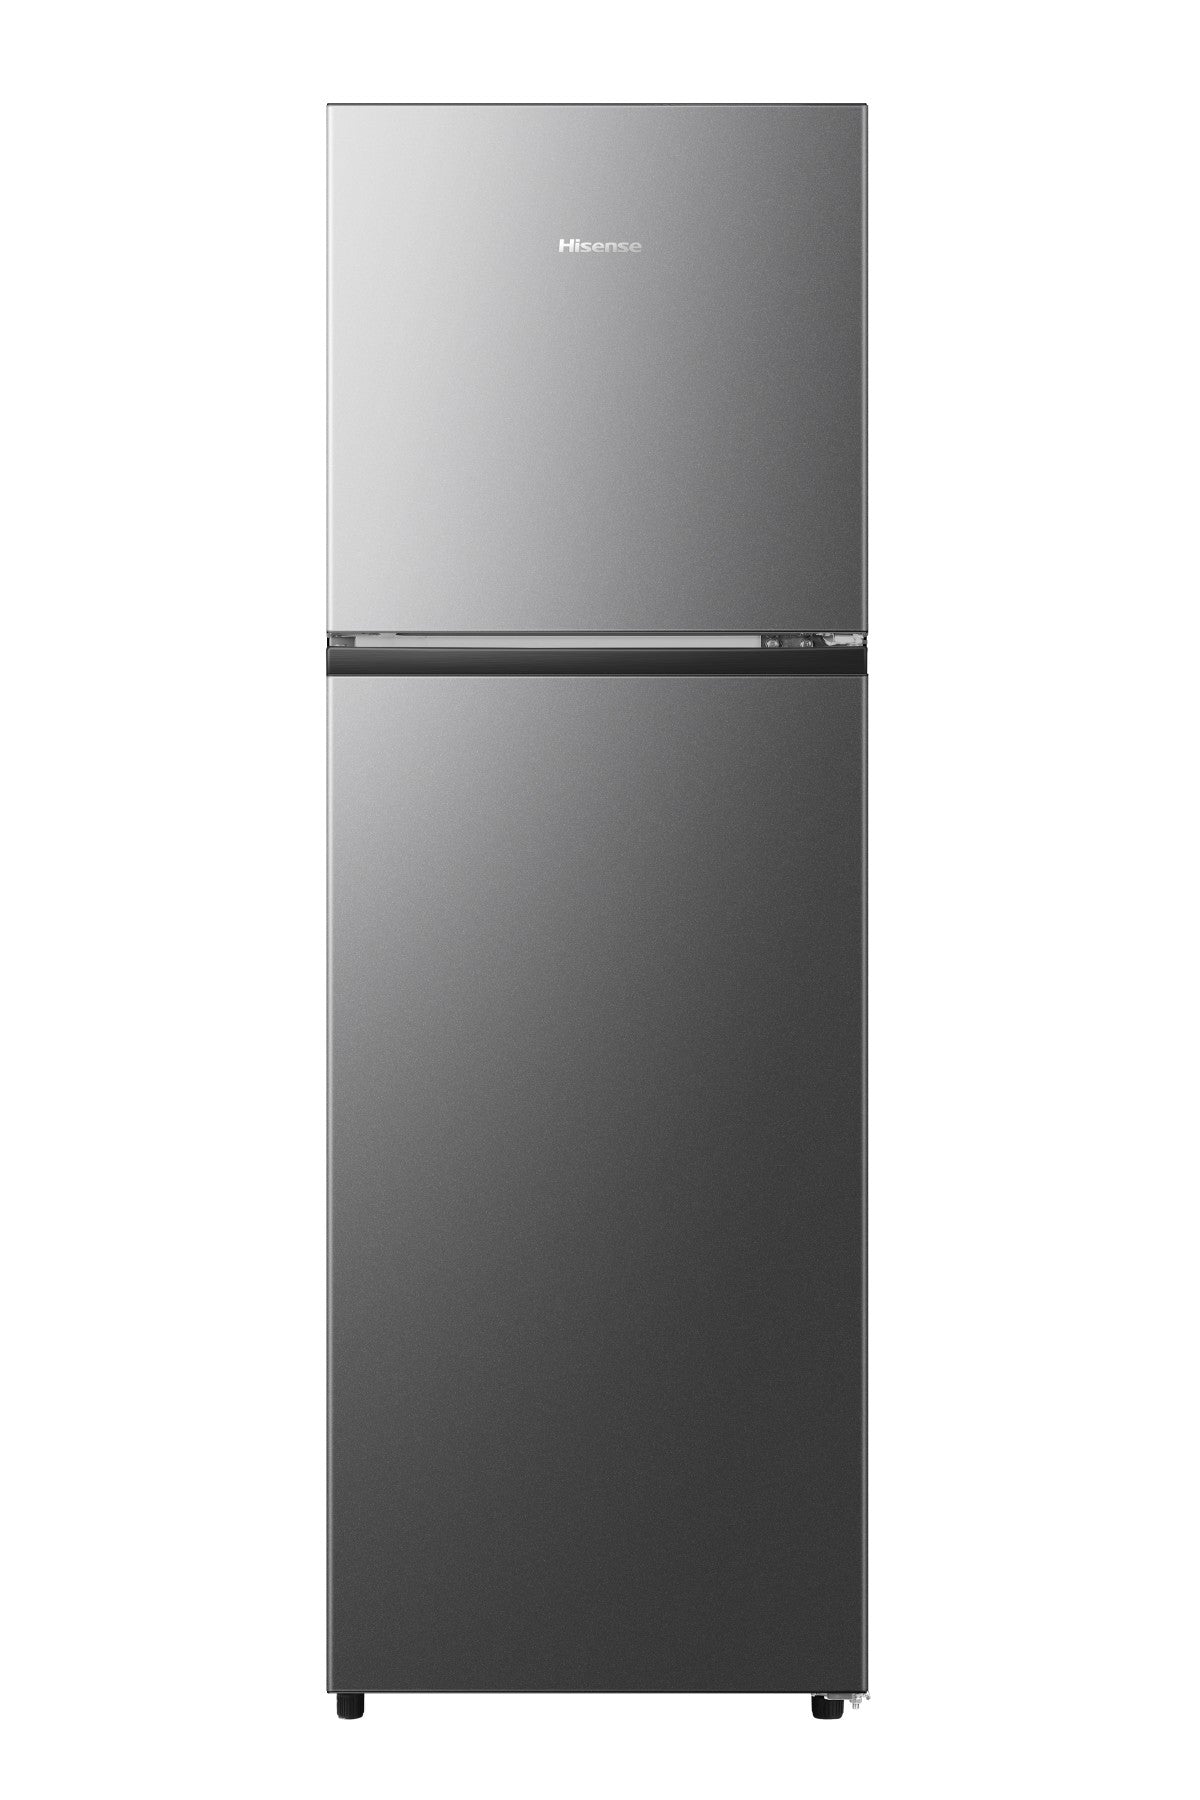 Hisense REF 200DR 154 Litres Top Freezer Refrigerator